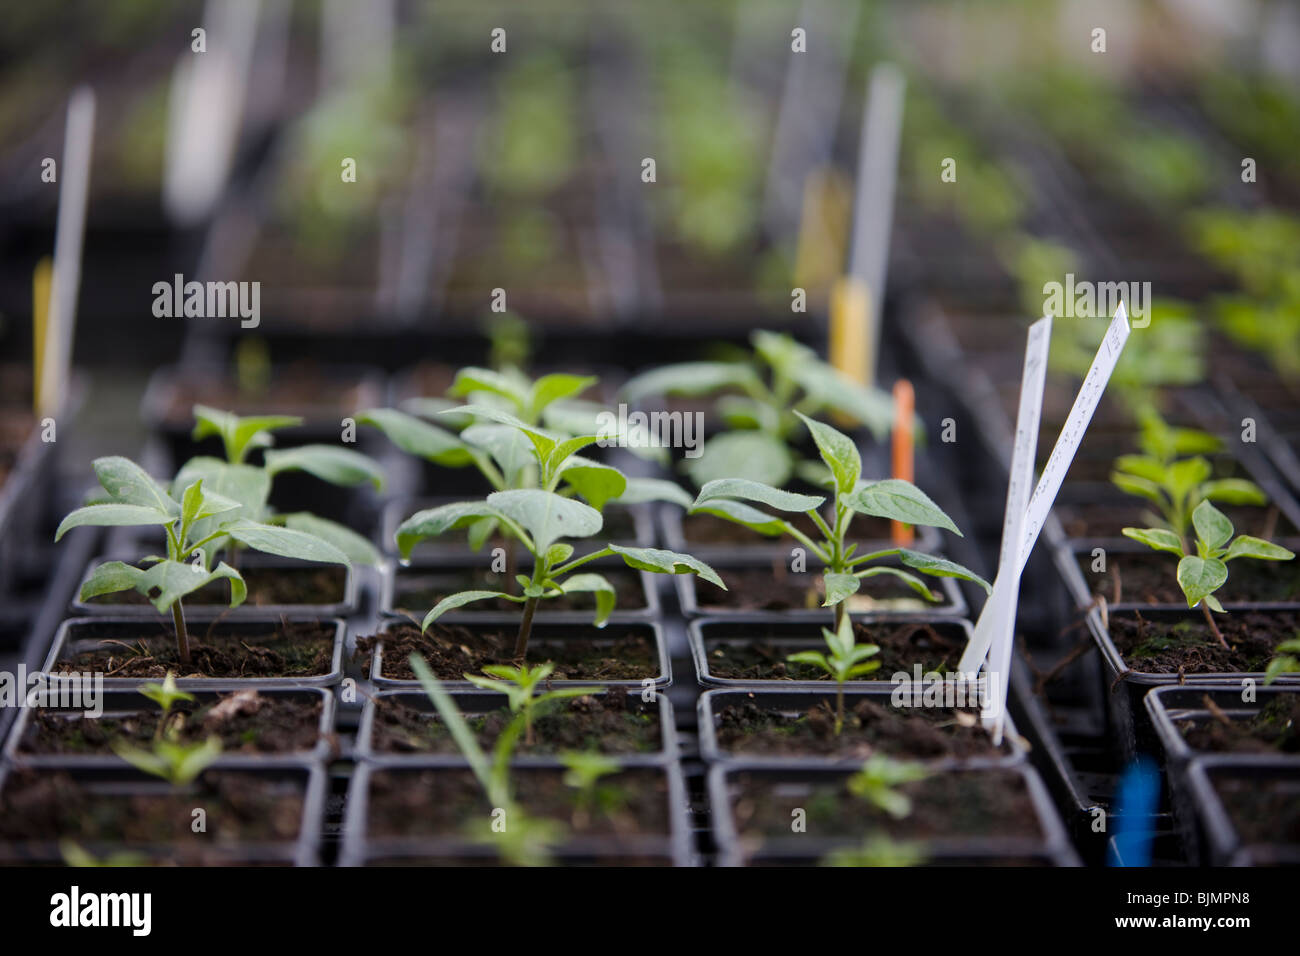 Spring seedling of organic herbs Stock Photo